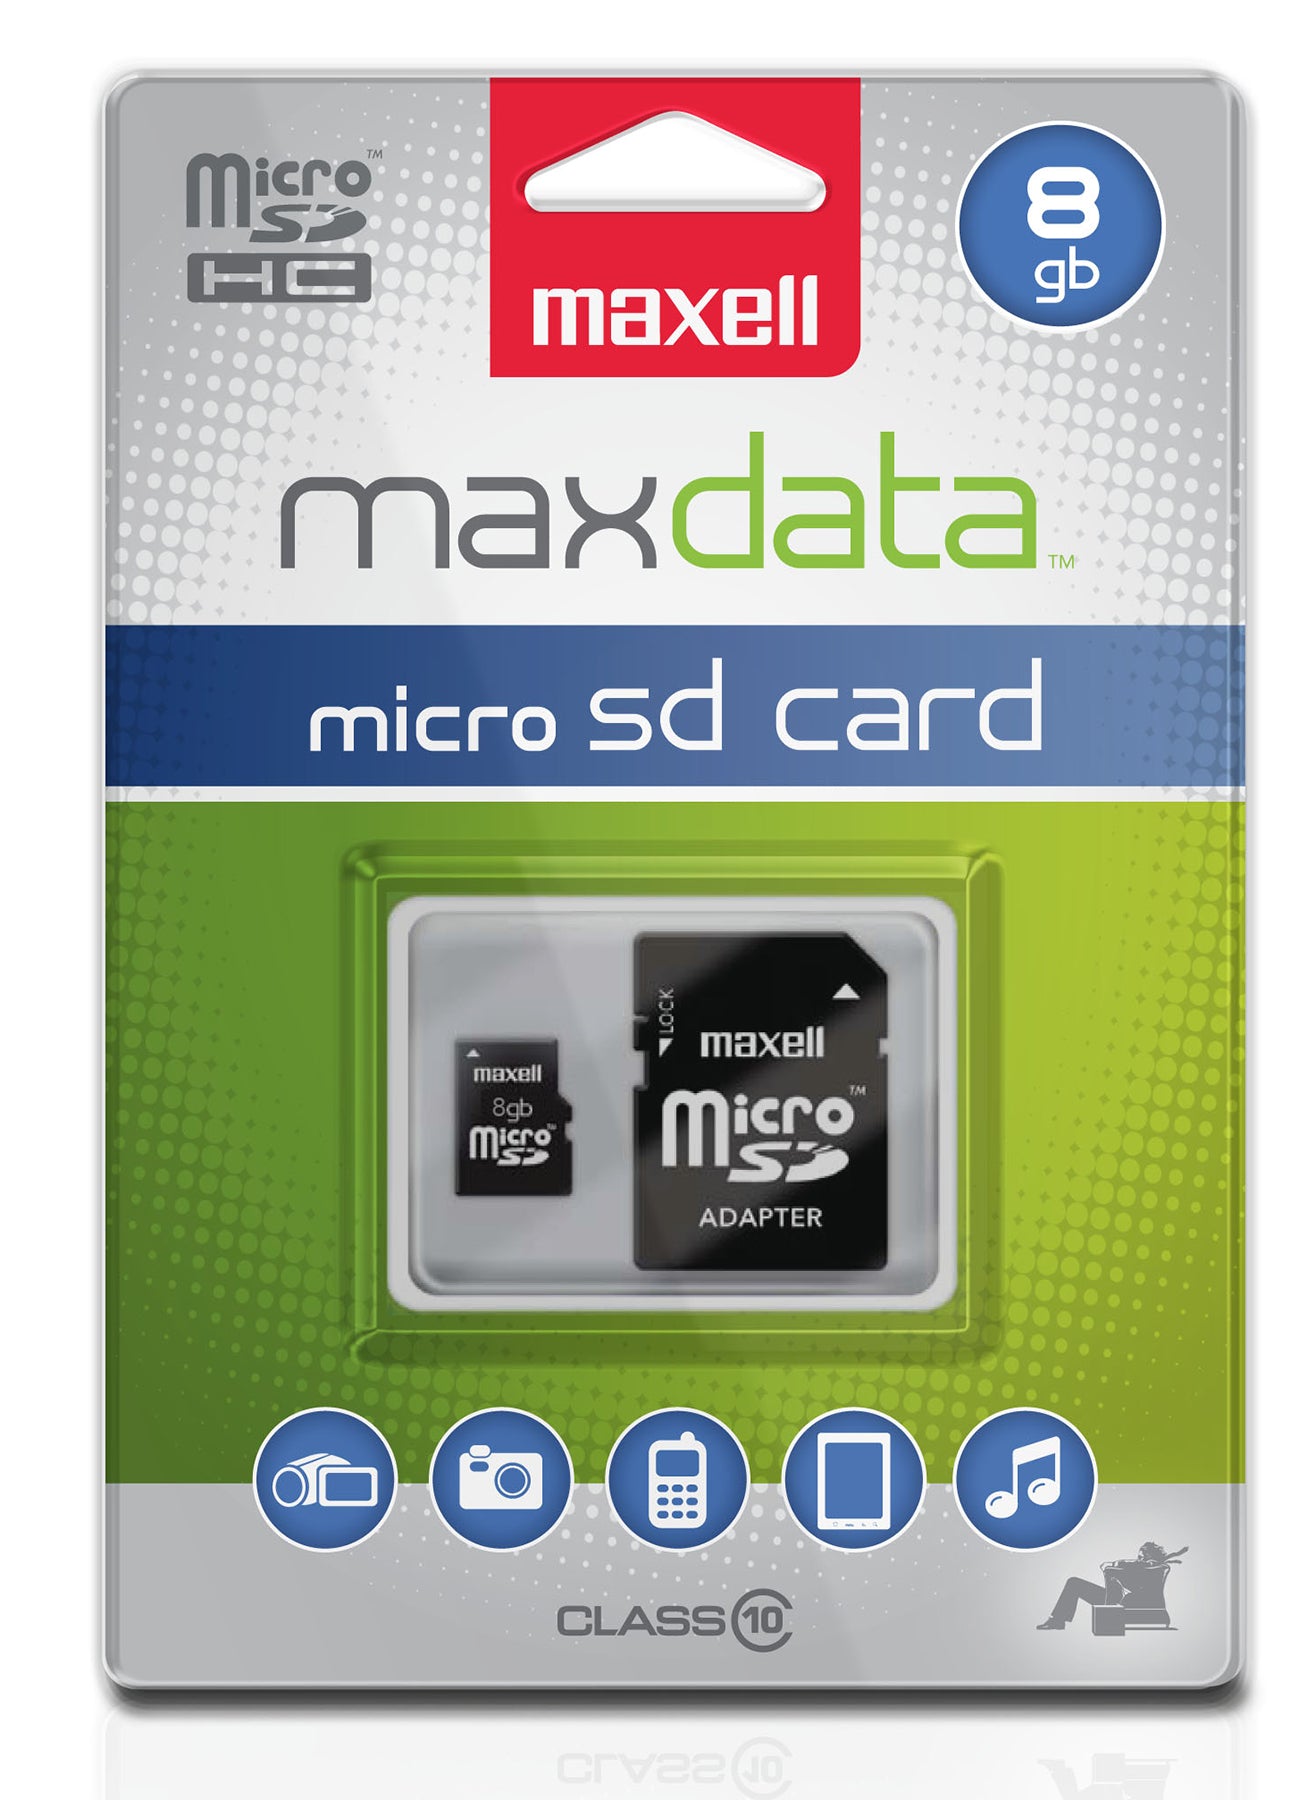 Maxell, Maxell 502302 8 Gb Class 10 Maxdata Micro Sd Card With Adapter